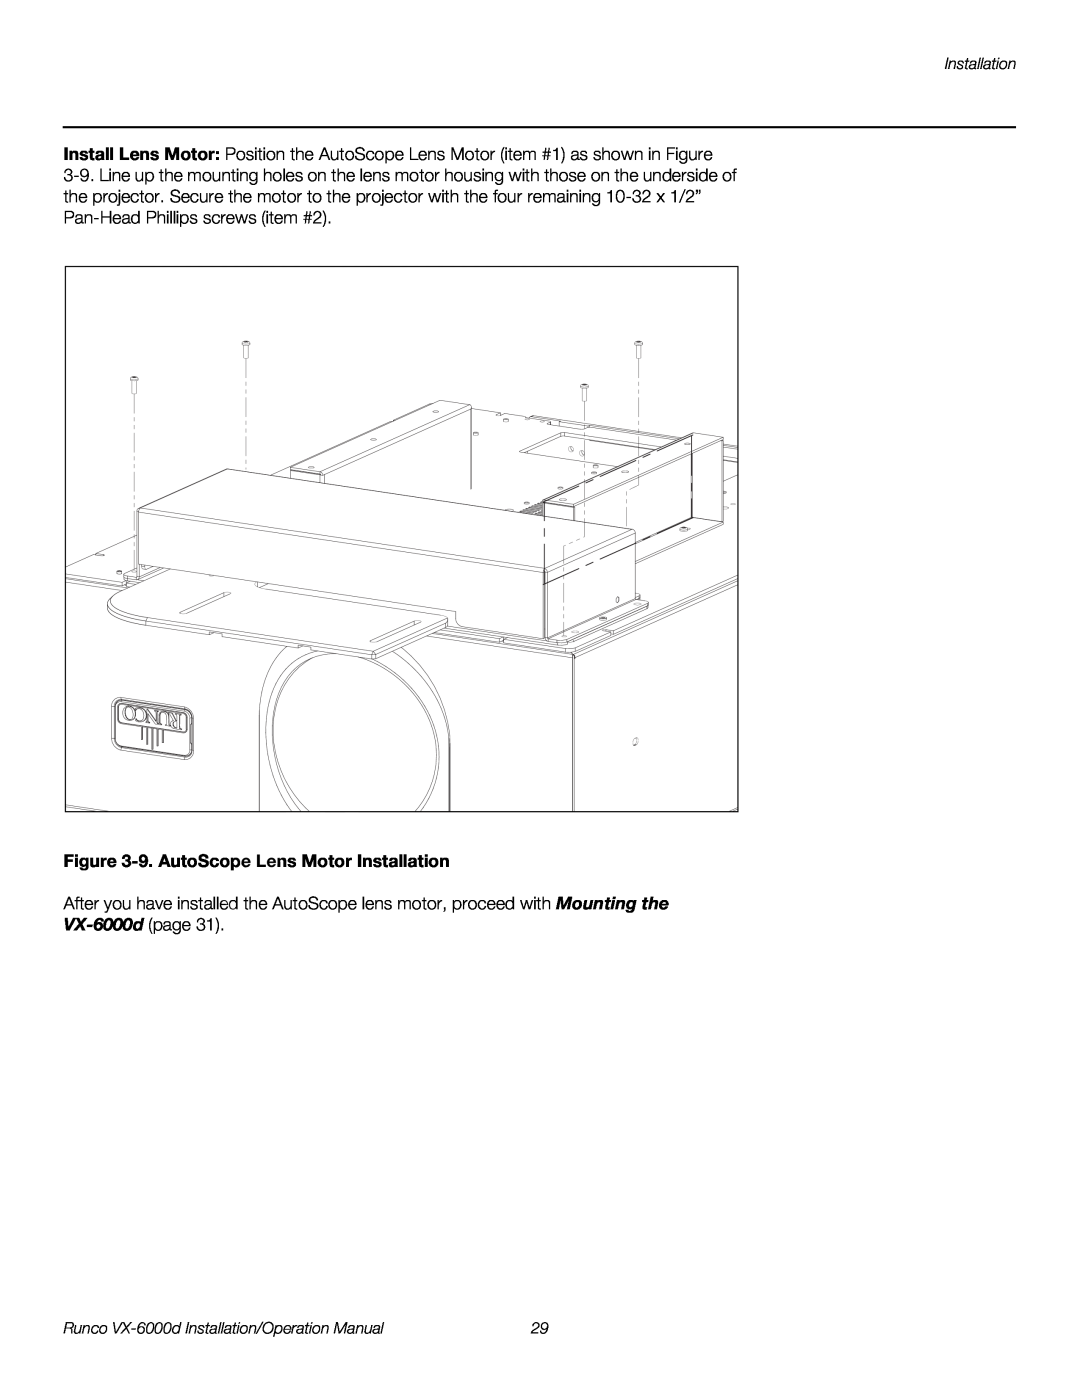 Runco VX-6000D operation manual 9. AutoScope Lens Motor Installation 